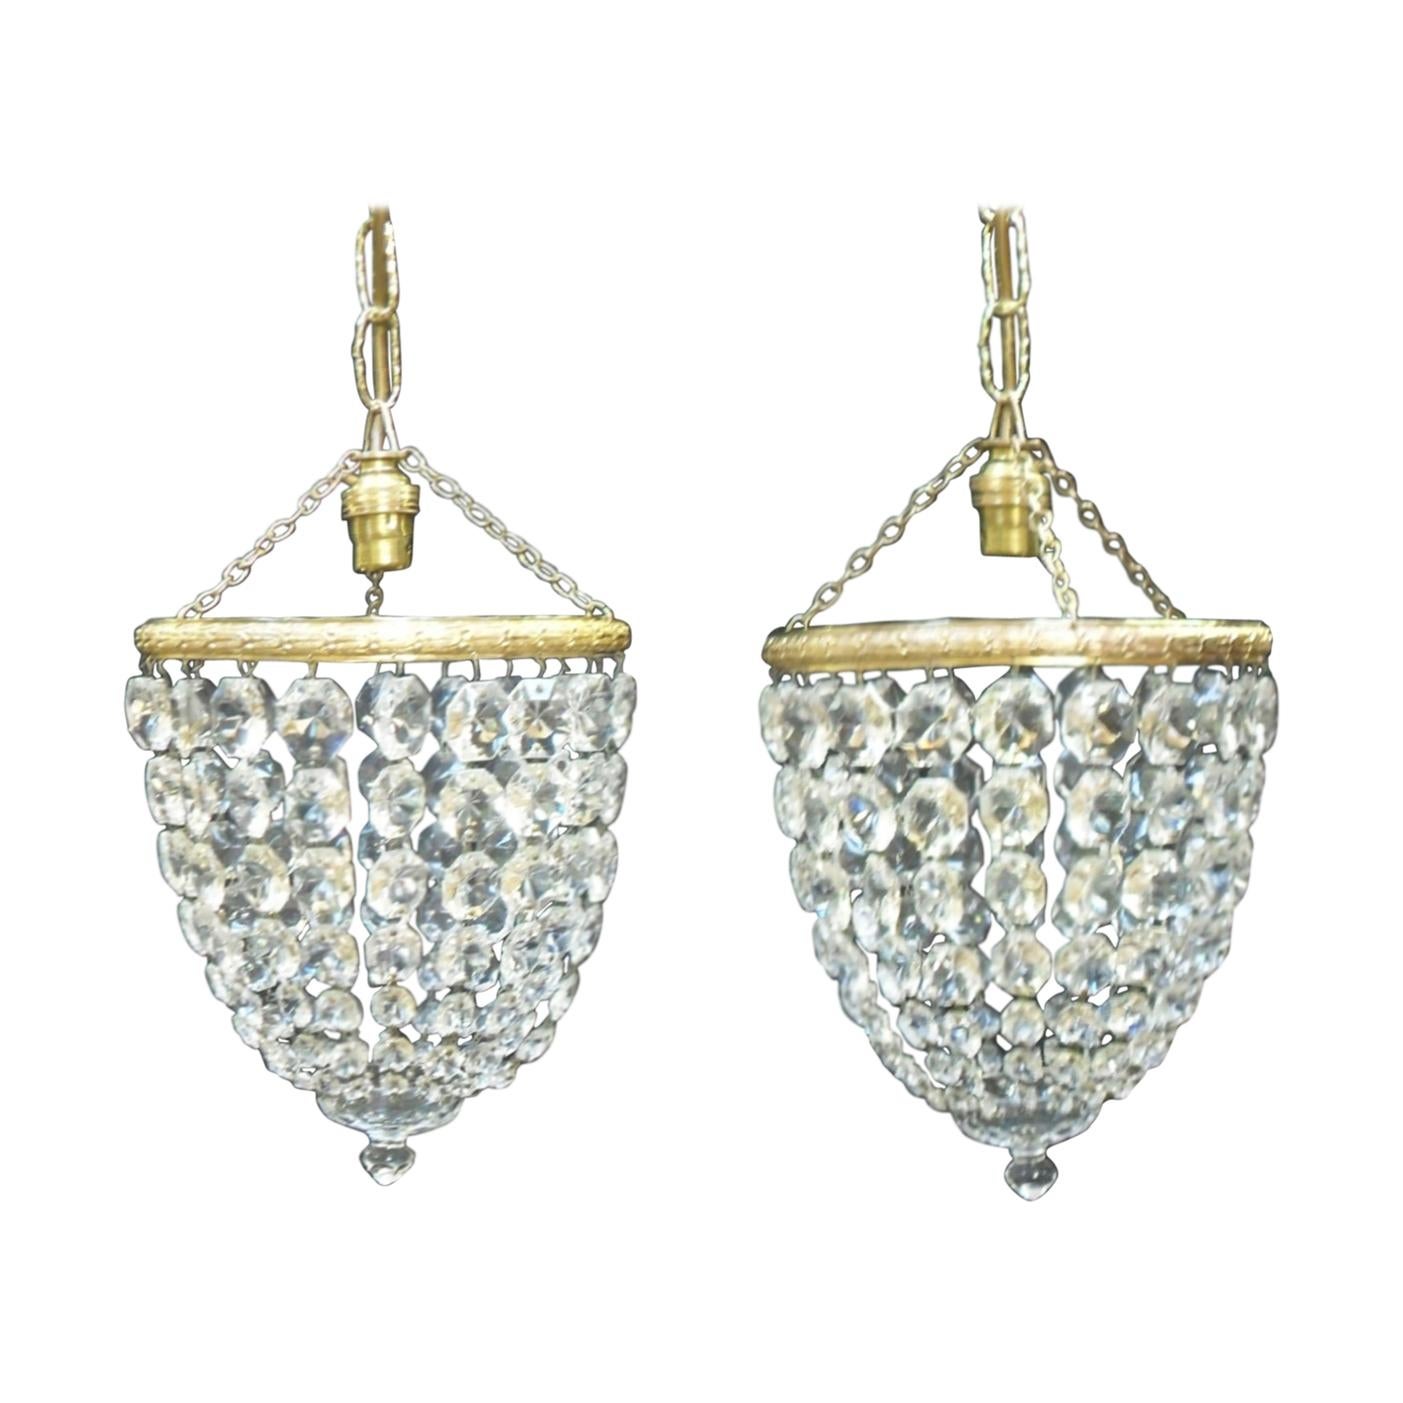 Pair of Italian Art Deco Crystal Glass Basket Chandeliers